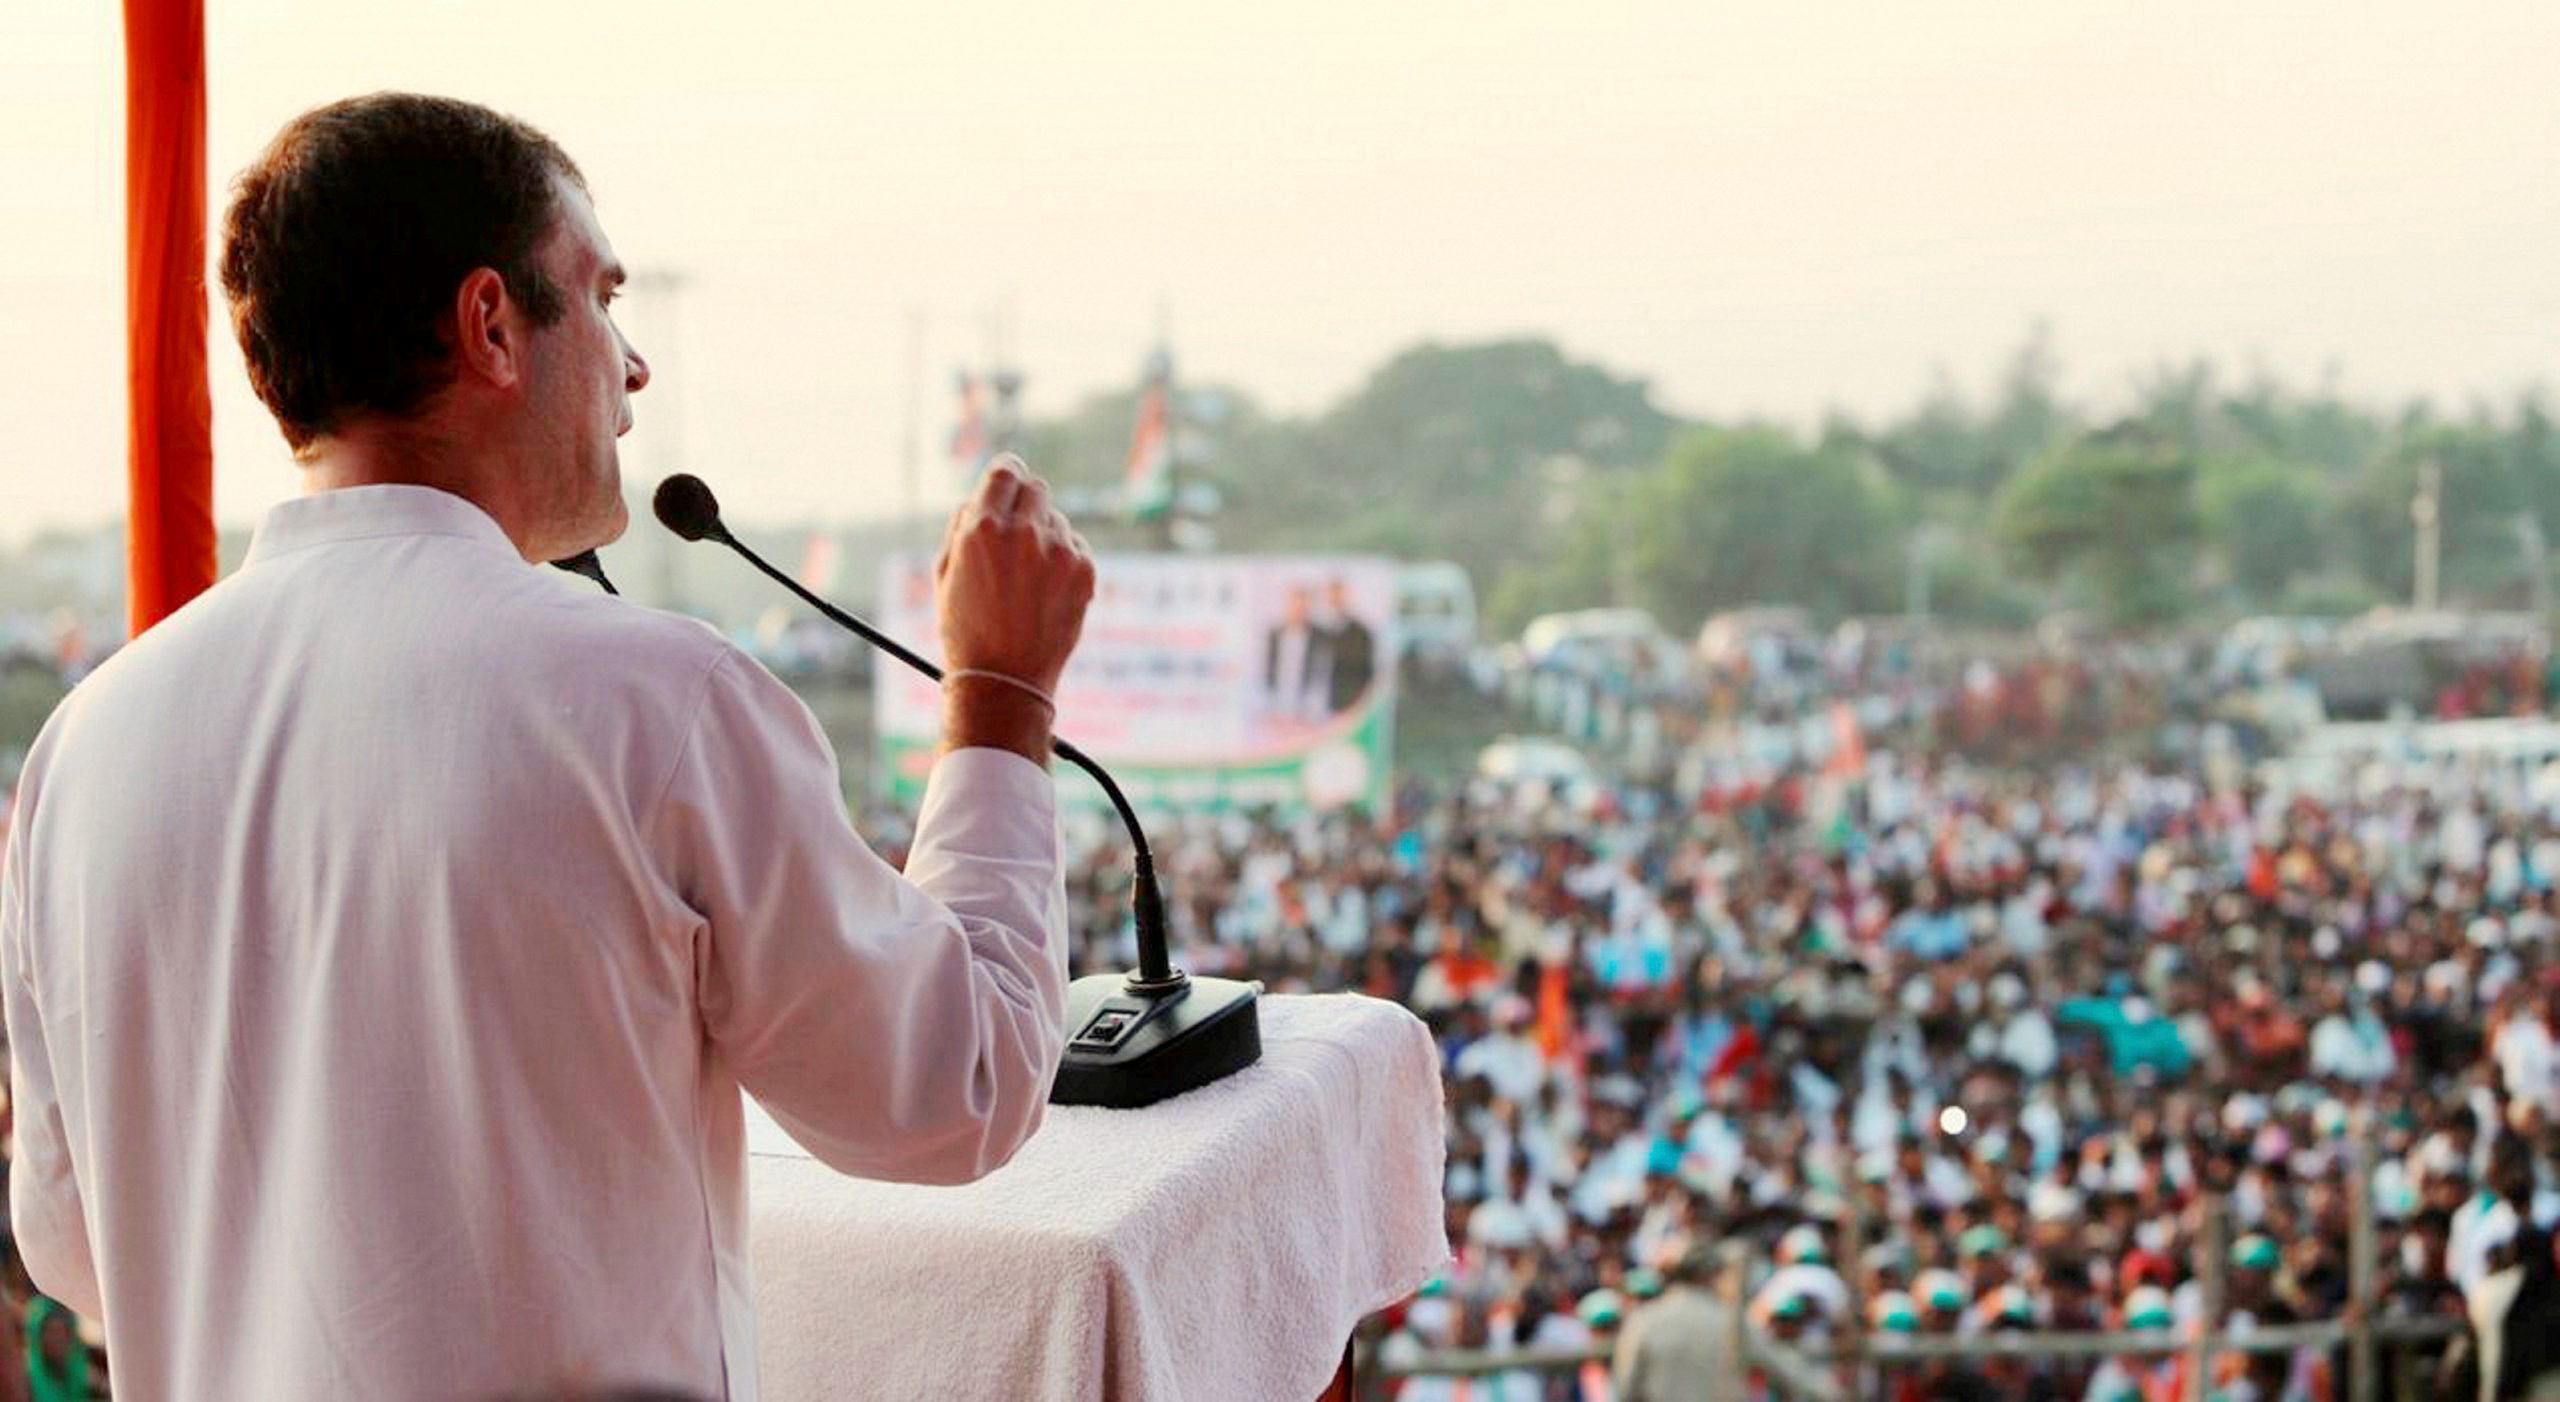 We did not get to see farmers’ agitation as Narendra Modi controls media: Rahul Gandhi